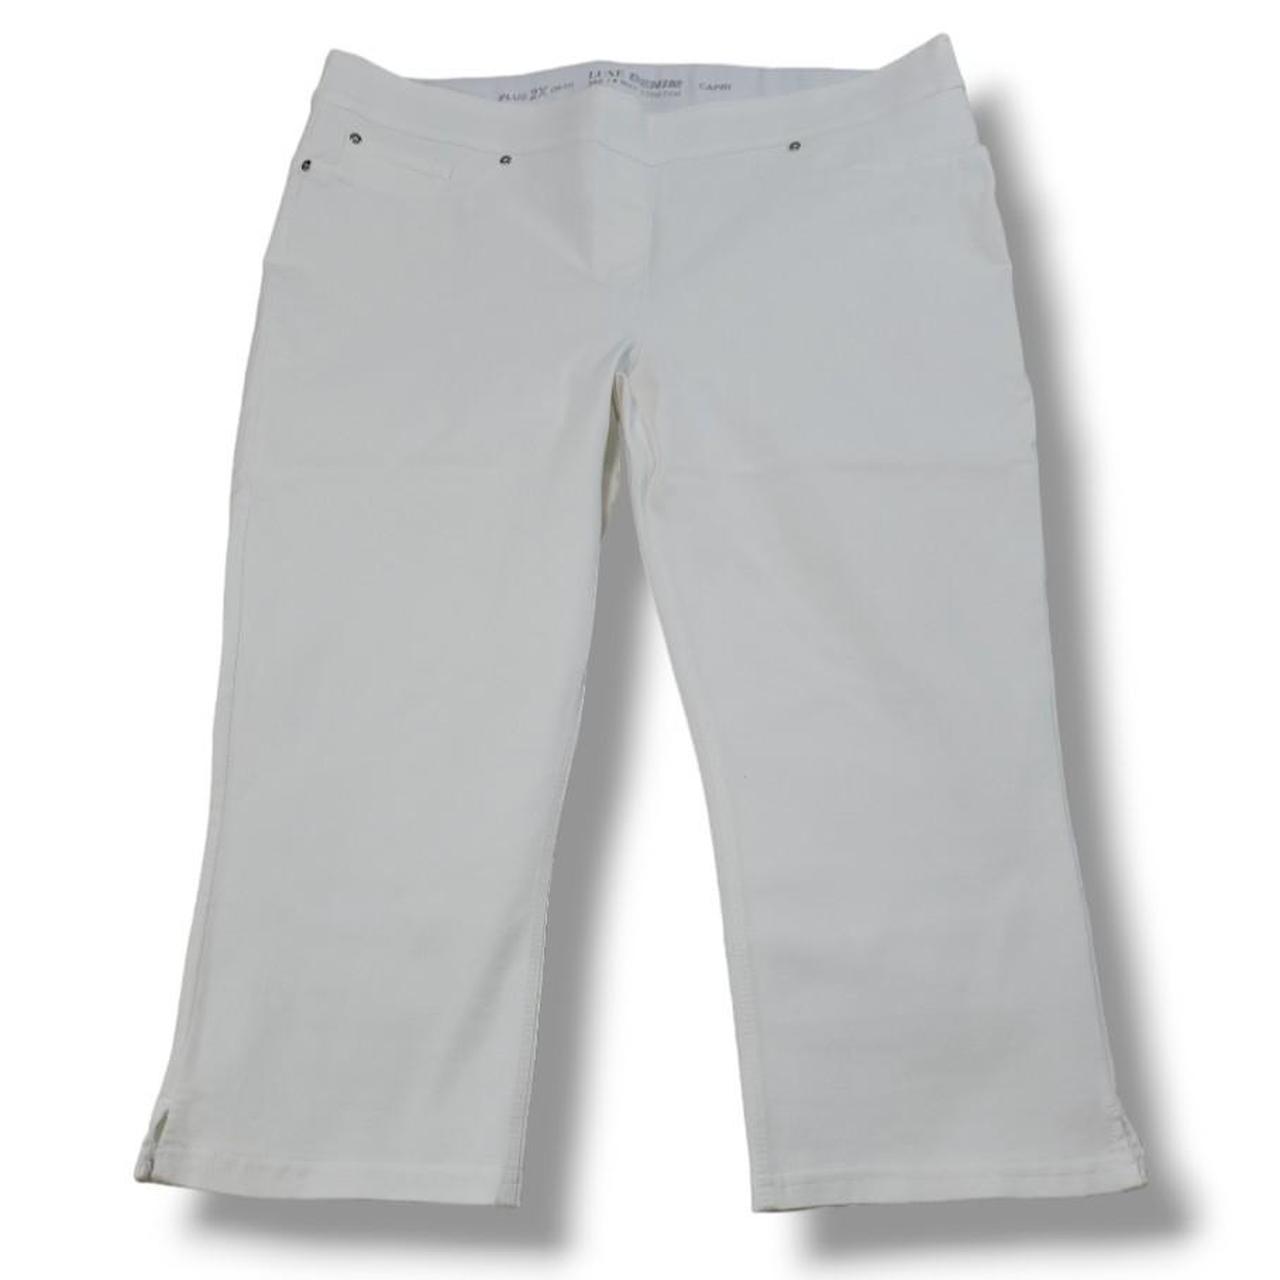 Luxe Denim Pants Size 2X (20-22) W42xL21 Plus Size - Depop